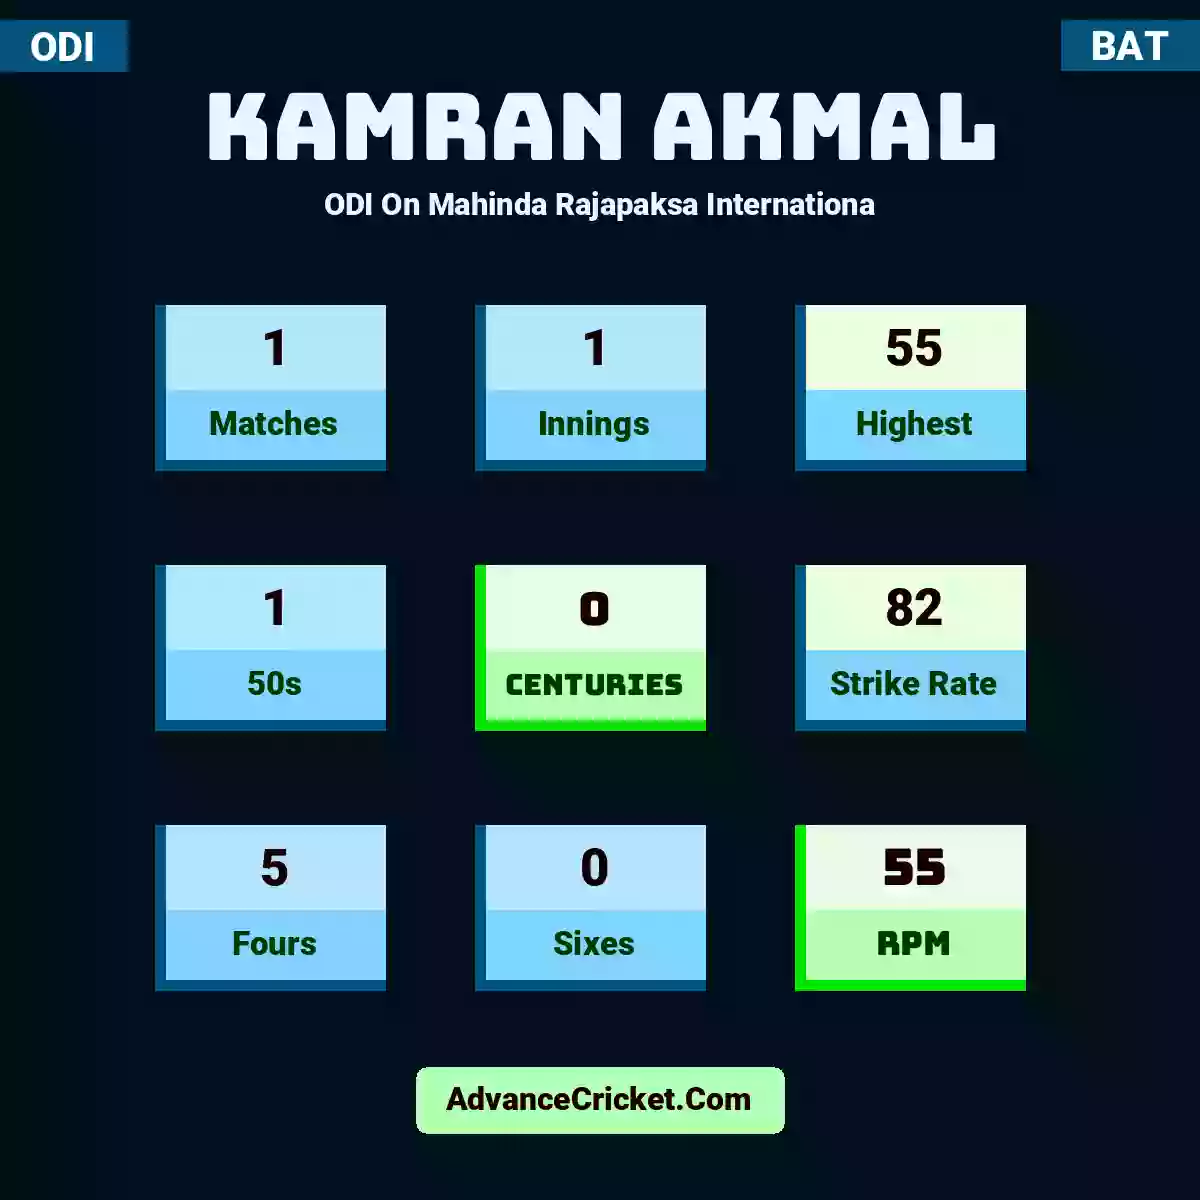 Kamran Akmal ODI  On Mahinda Rajapaksa Internationa, Kamran Akmal played 1 matches, scored 55 runs as highest, 1 half-centuries, and 0 centuries, with a strike rate of 82. K.Akmal hit 5 fours and 0 sixes, with an RPM of 55.